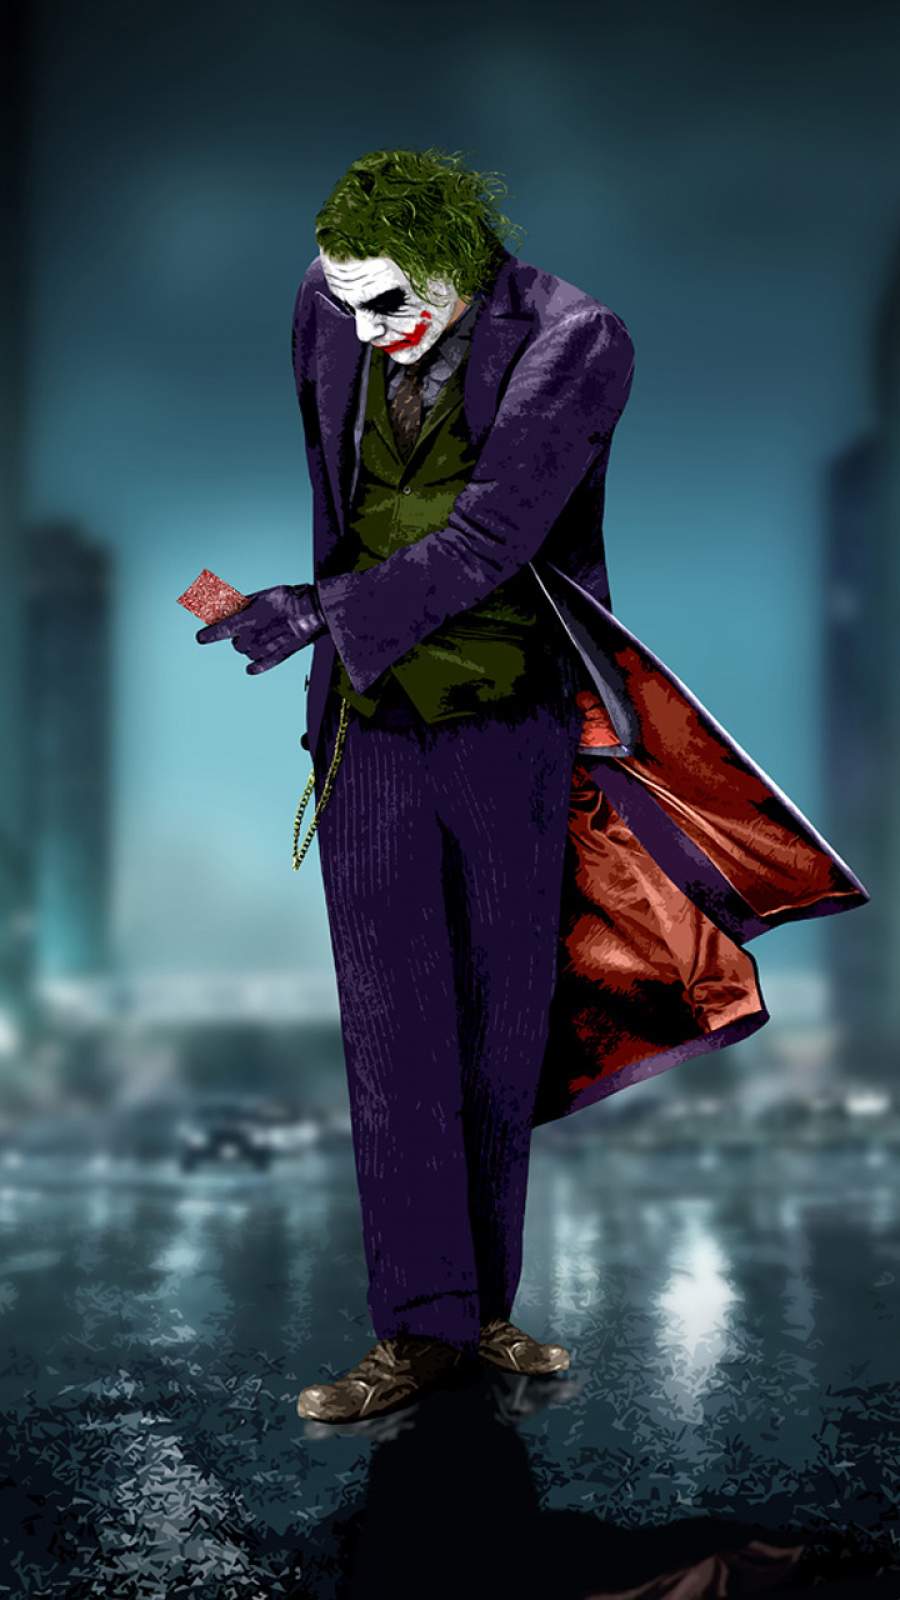 Wallpapers | Joker Movie 2019 ( iPhone X ) - joker post - Imgur